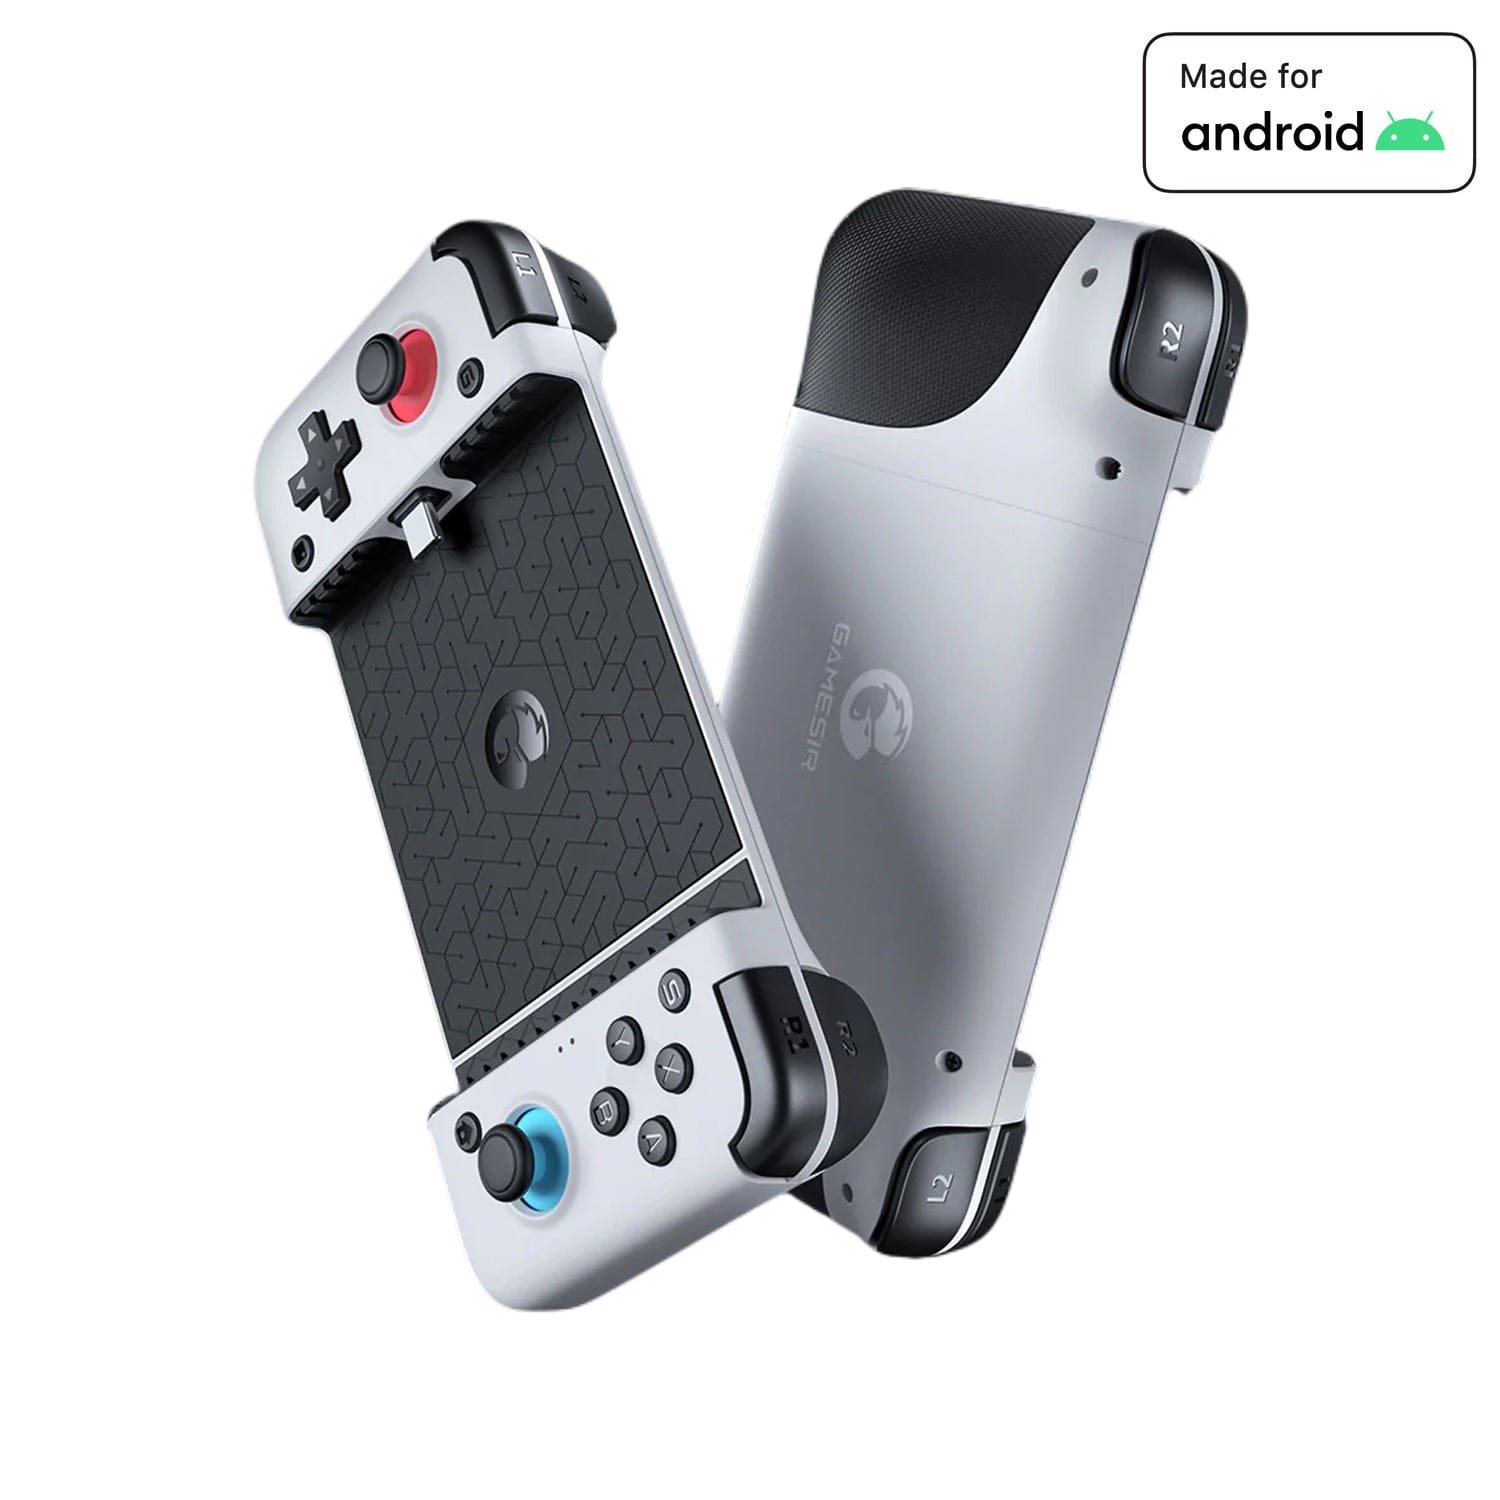 Gamesir X2 Bluetooth Controller review - Tech-Gaming